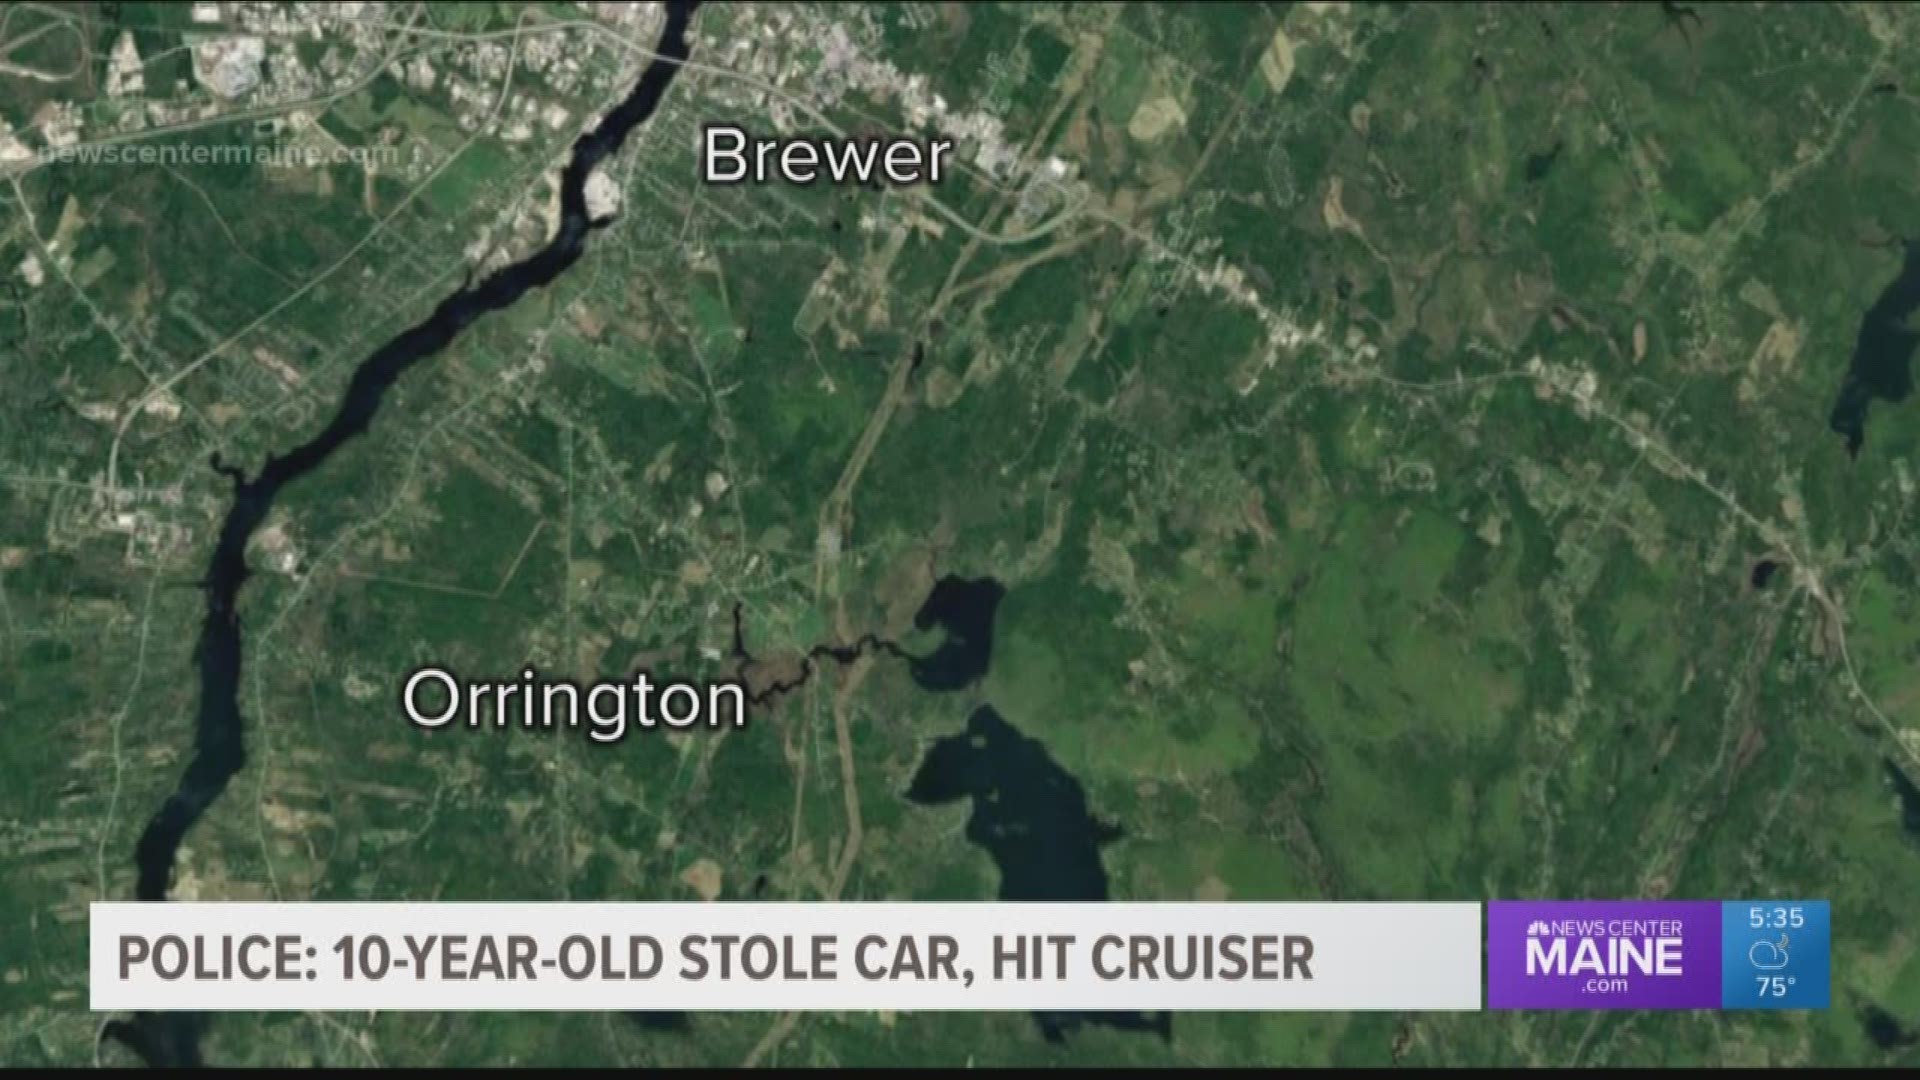 Police: 10-year-old stole car, hit cruiser